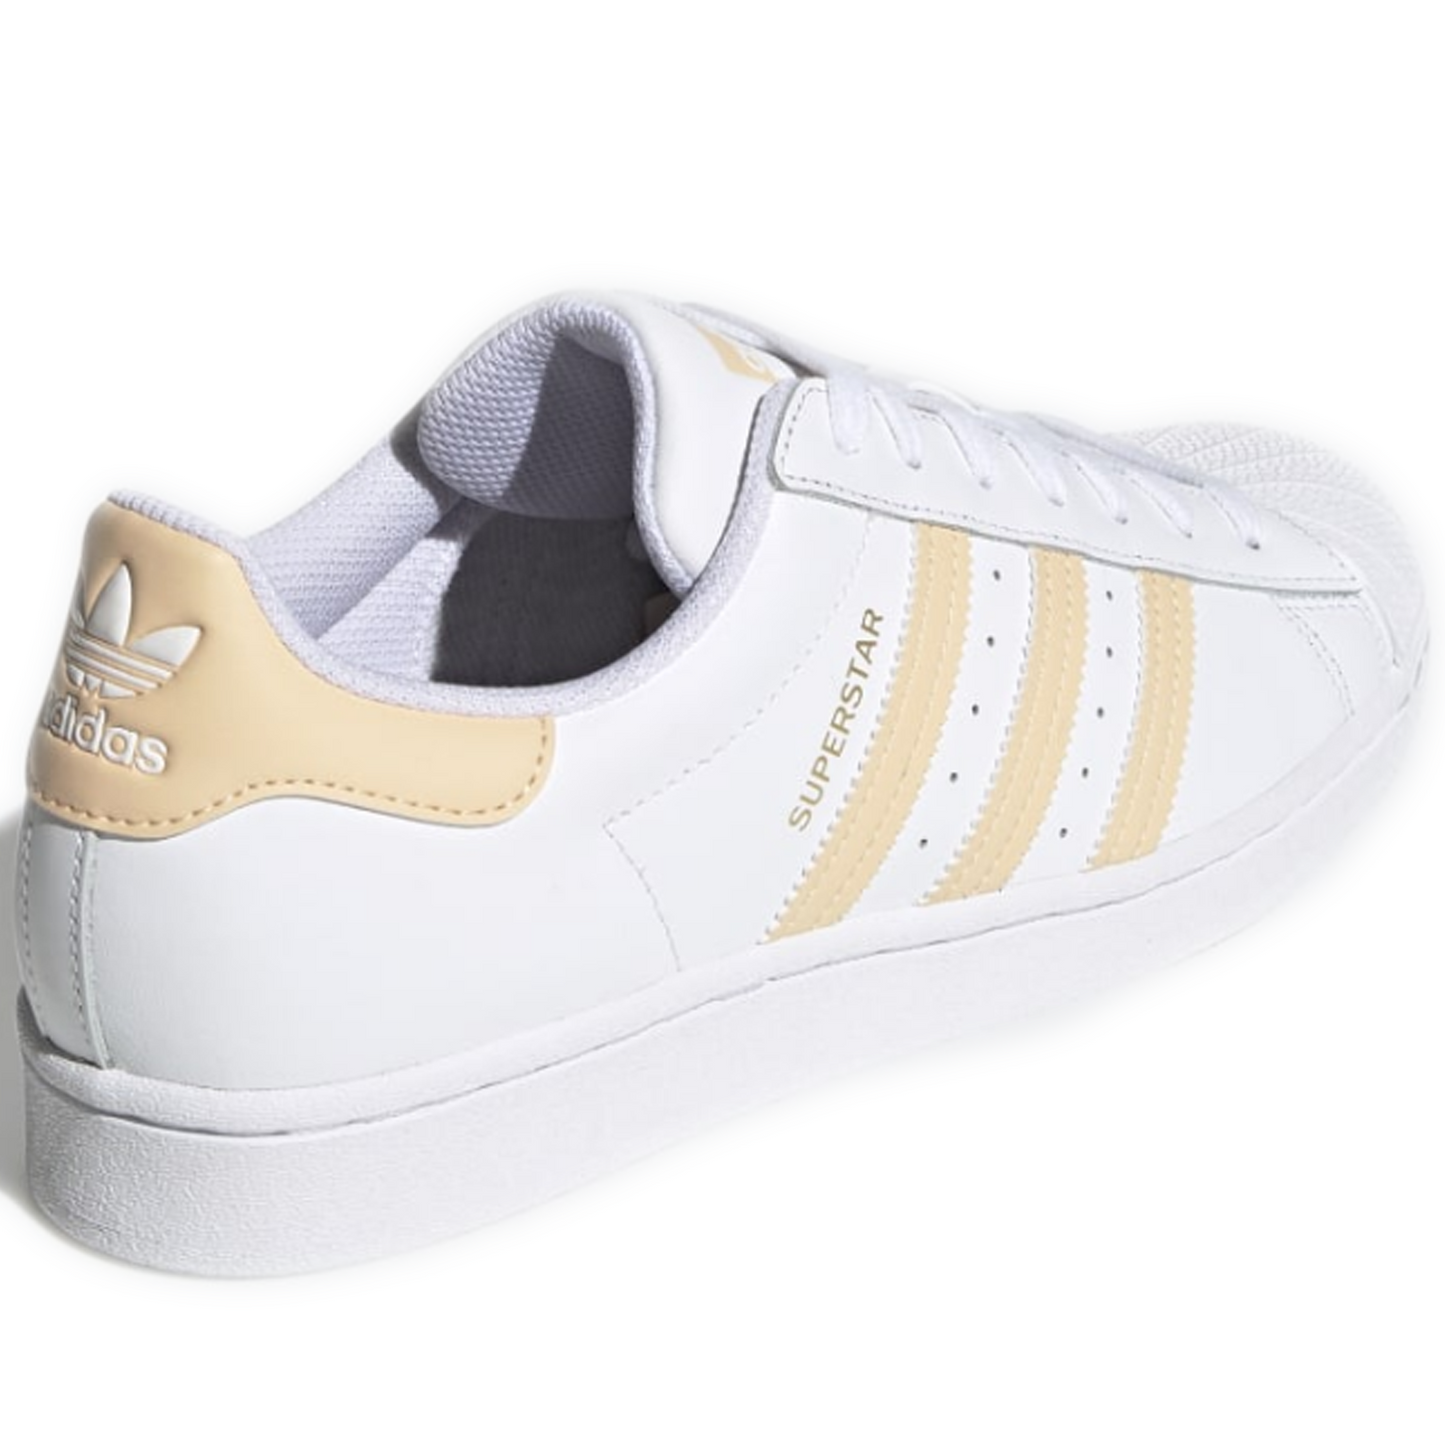 Men's Adidas Superstar Shoes - White/ Orange